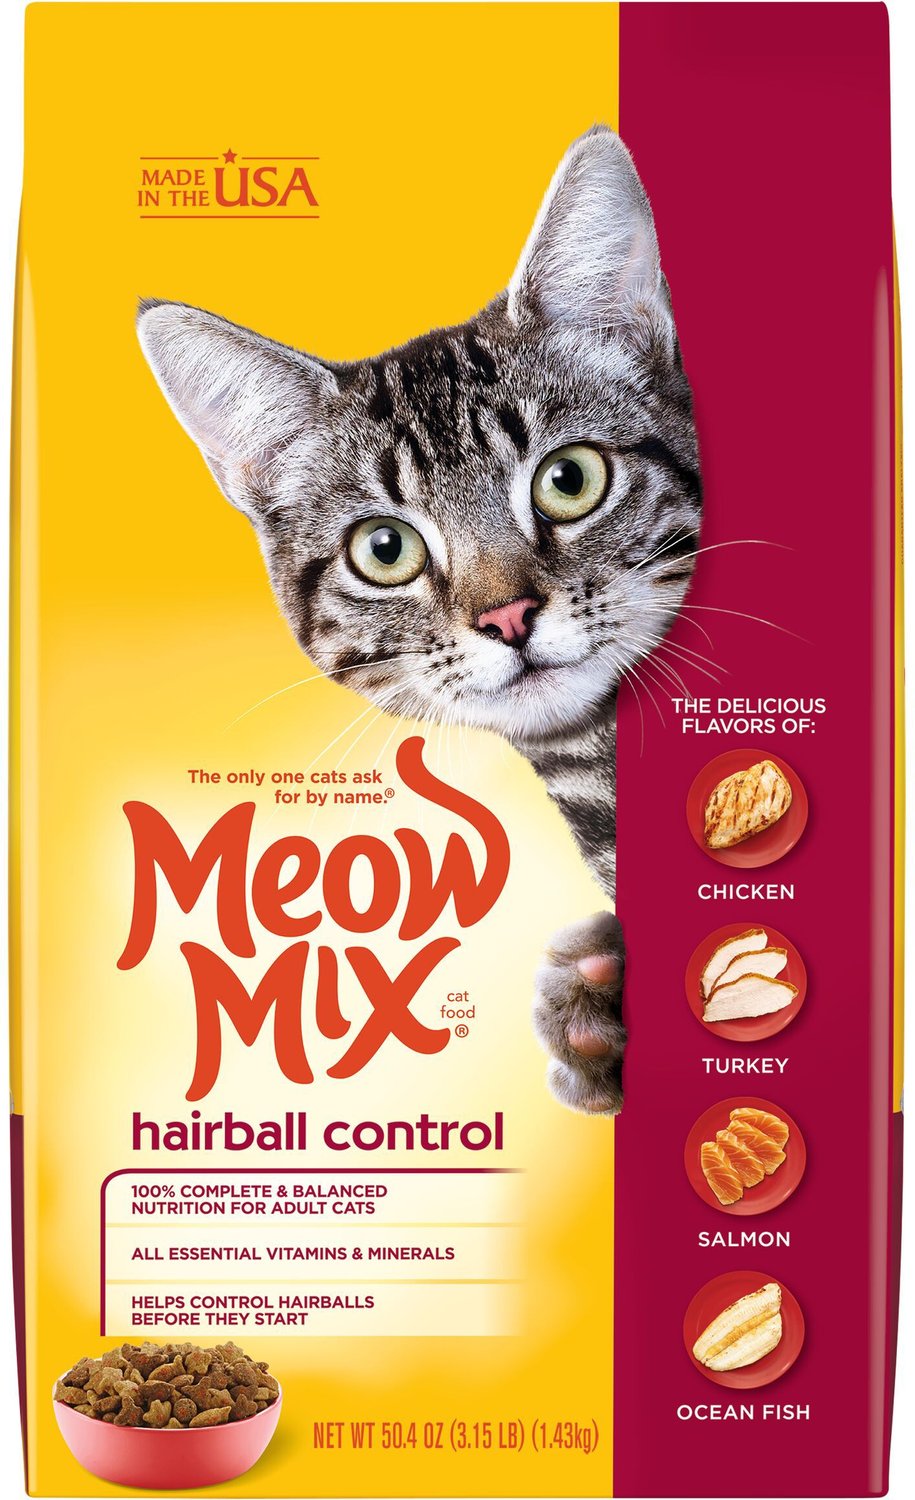 Buy Hills Science Diet Senior 7 Plus Hairball Control Dry Cat Food Online